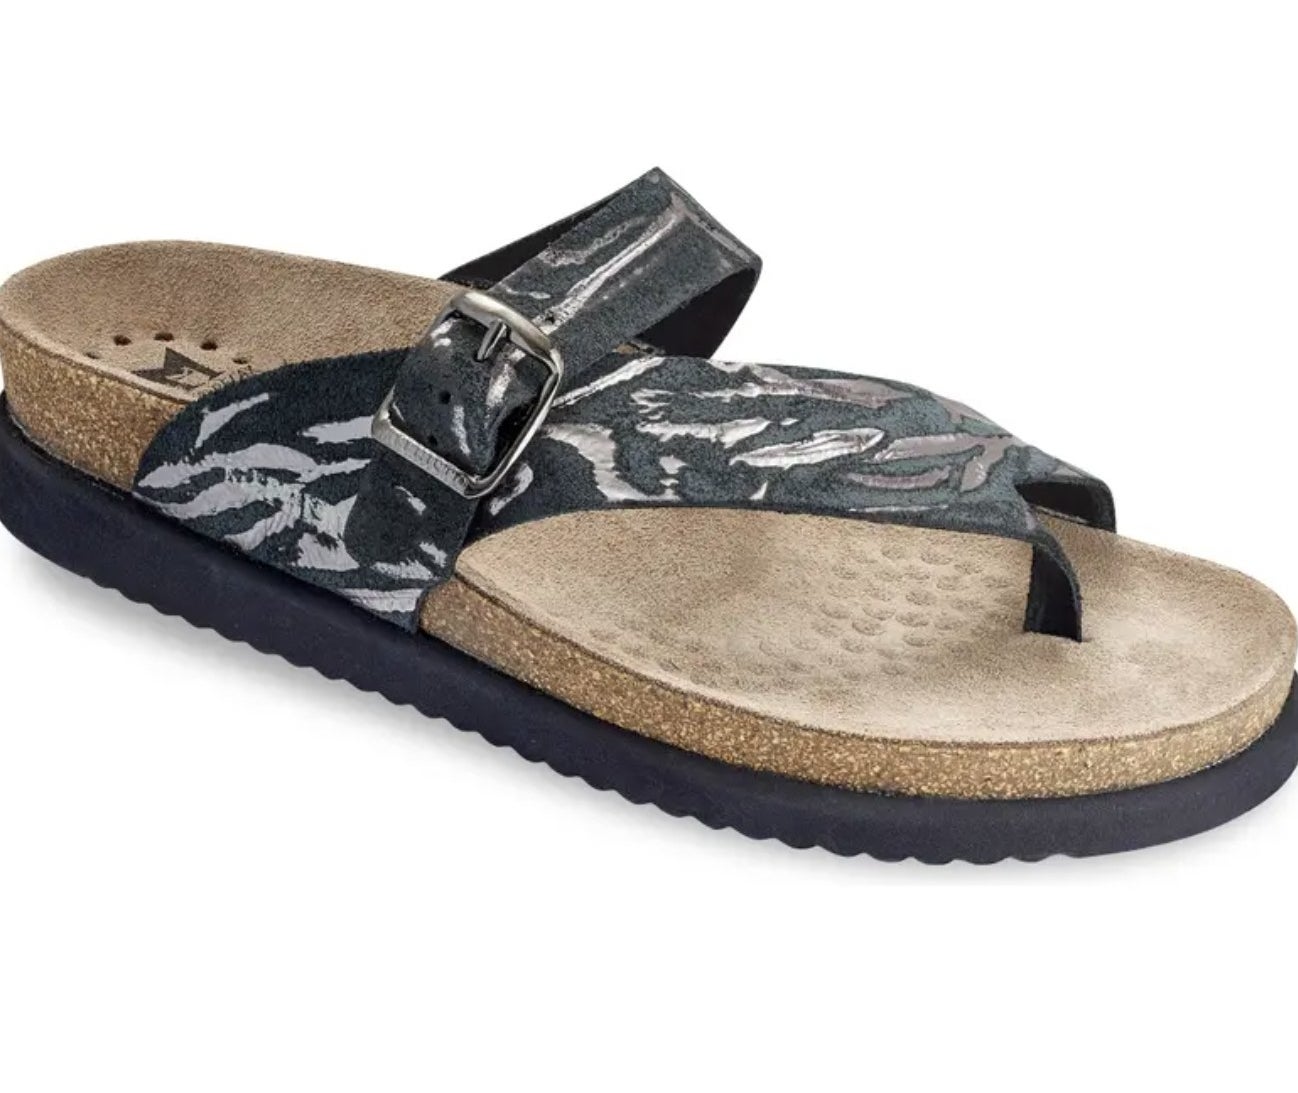 the zebra print strappy open-toe flip flop sandal